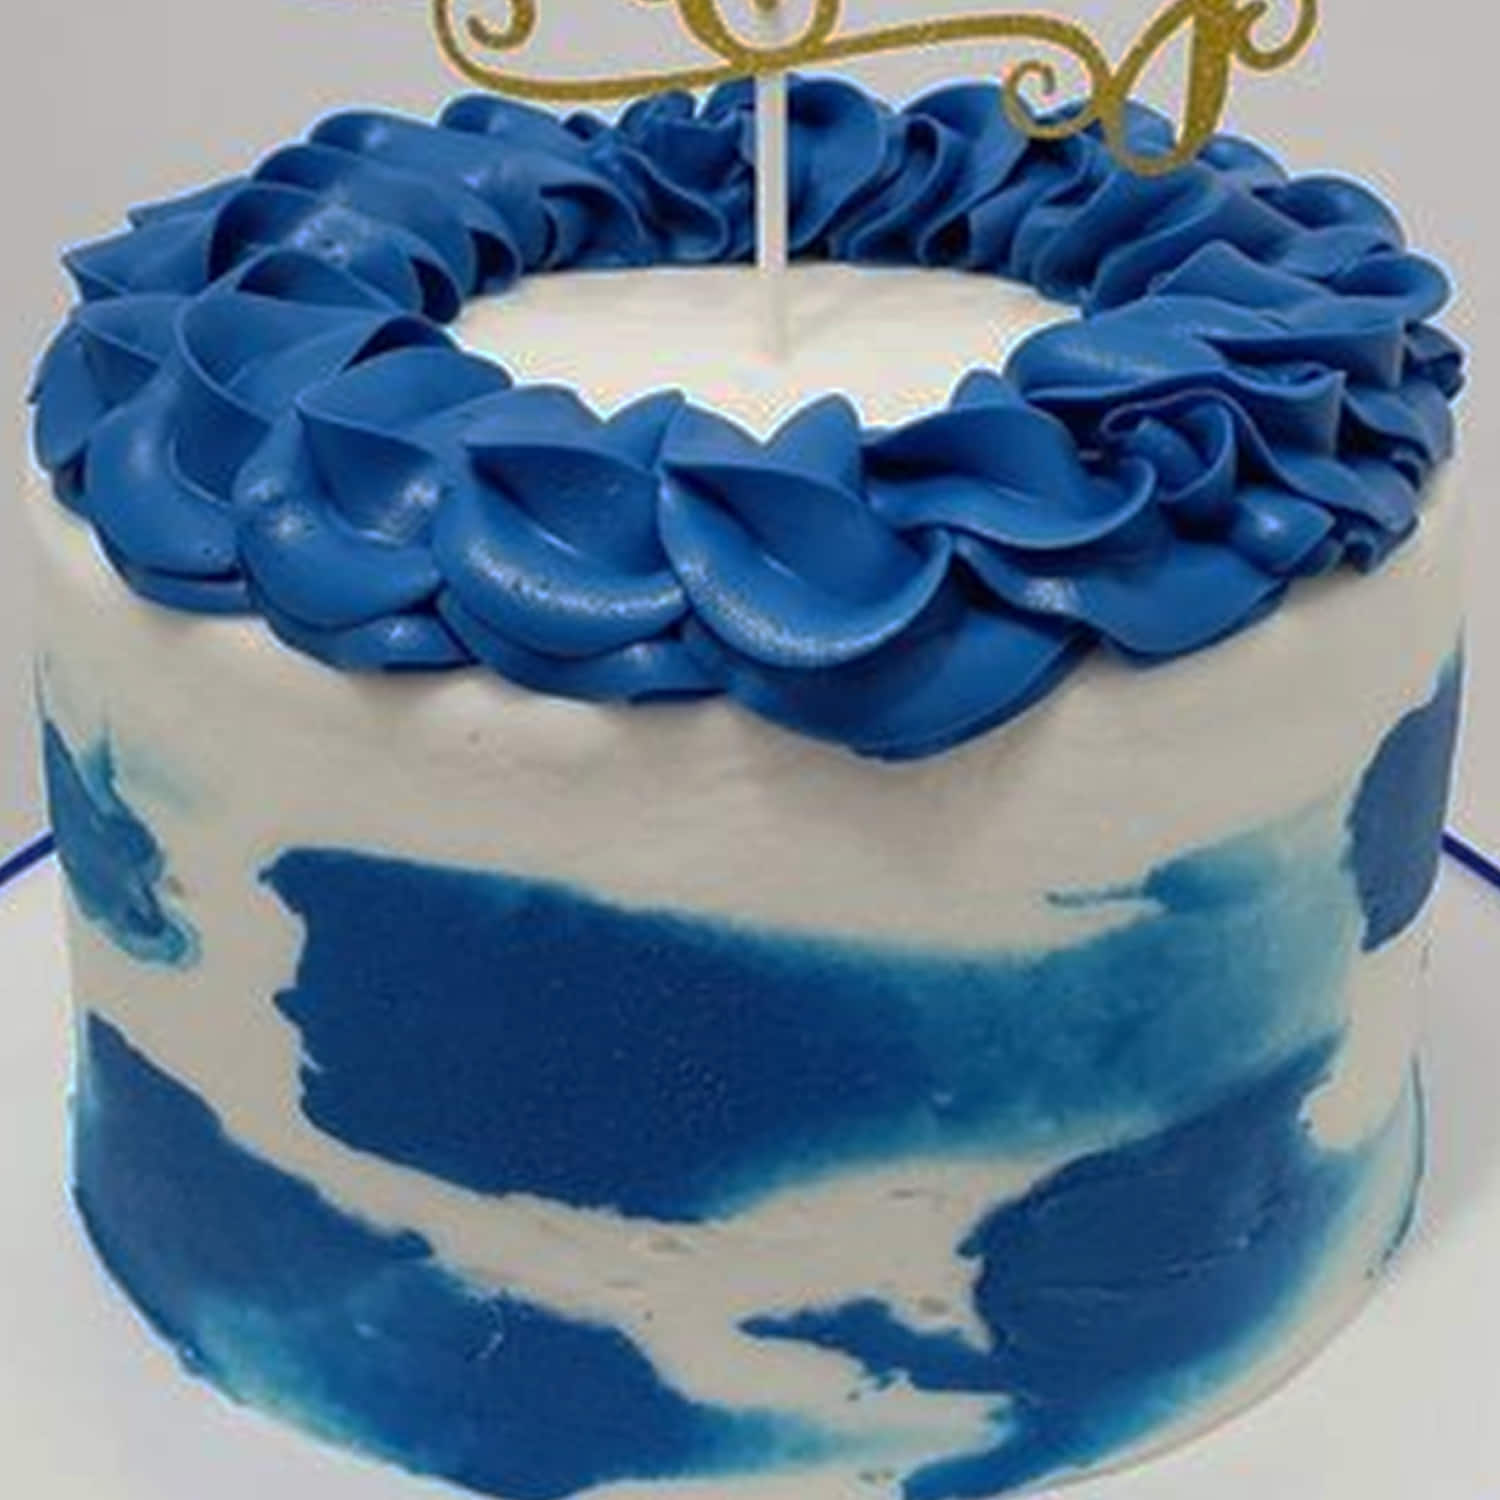 Pastel Blue Cake | Macaron Birthday Cake | Order Custom Cakes in Bangalore  – Liliyum Patisserie & Cafe